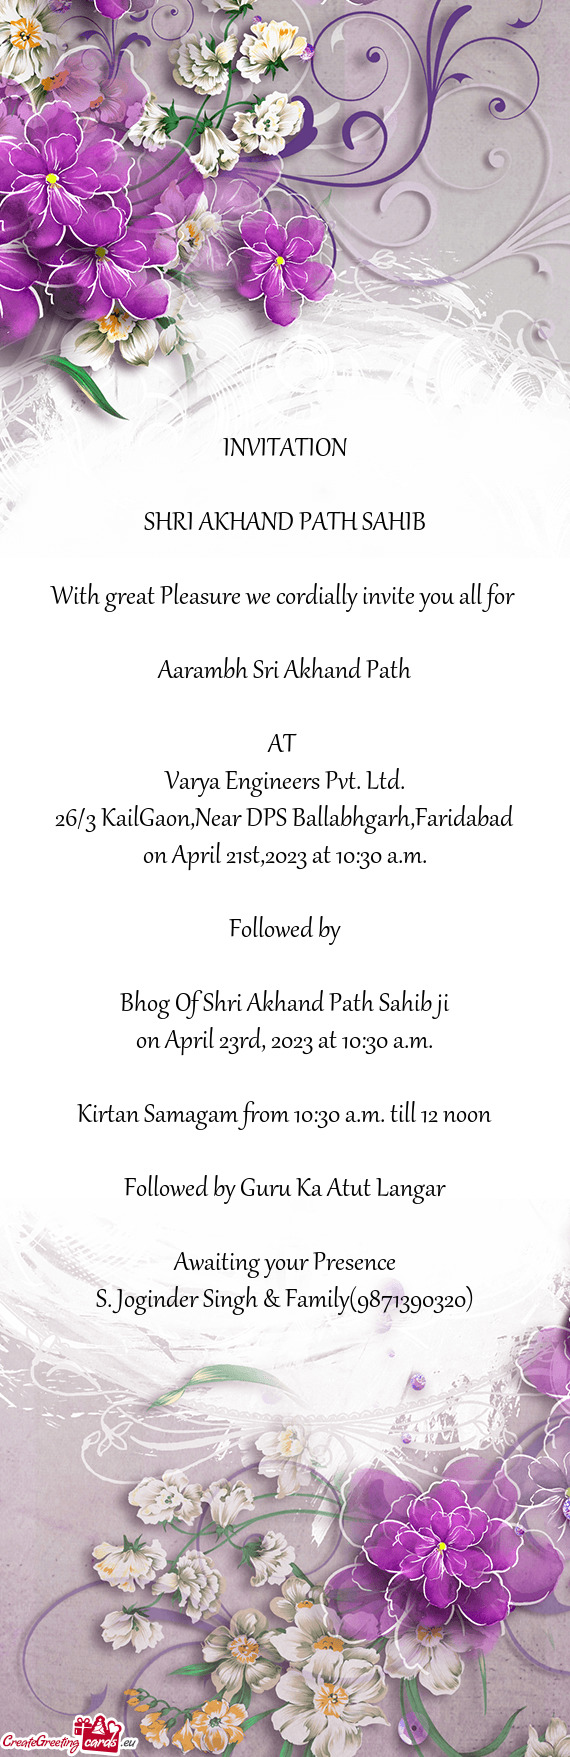 Varya Engineers Pvt. Ltd